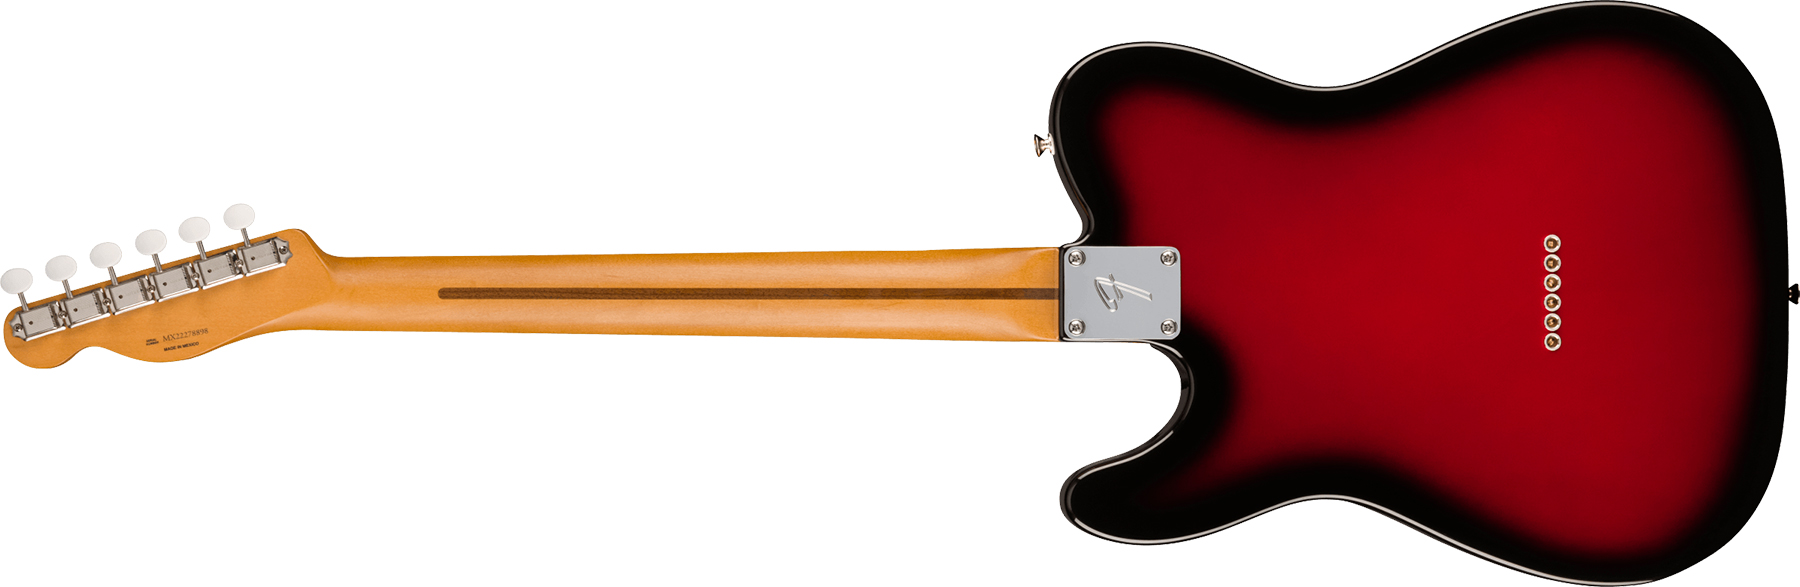 Fender Tele Gold Foil Ltd Mex 2mh Ht Eb - Candy Apple Burst - Televorm elektrische gitaar - Variation 1